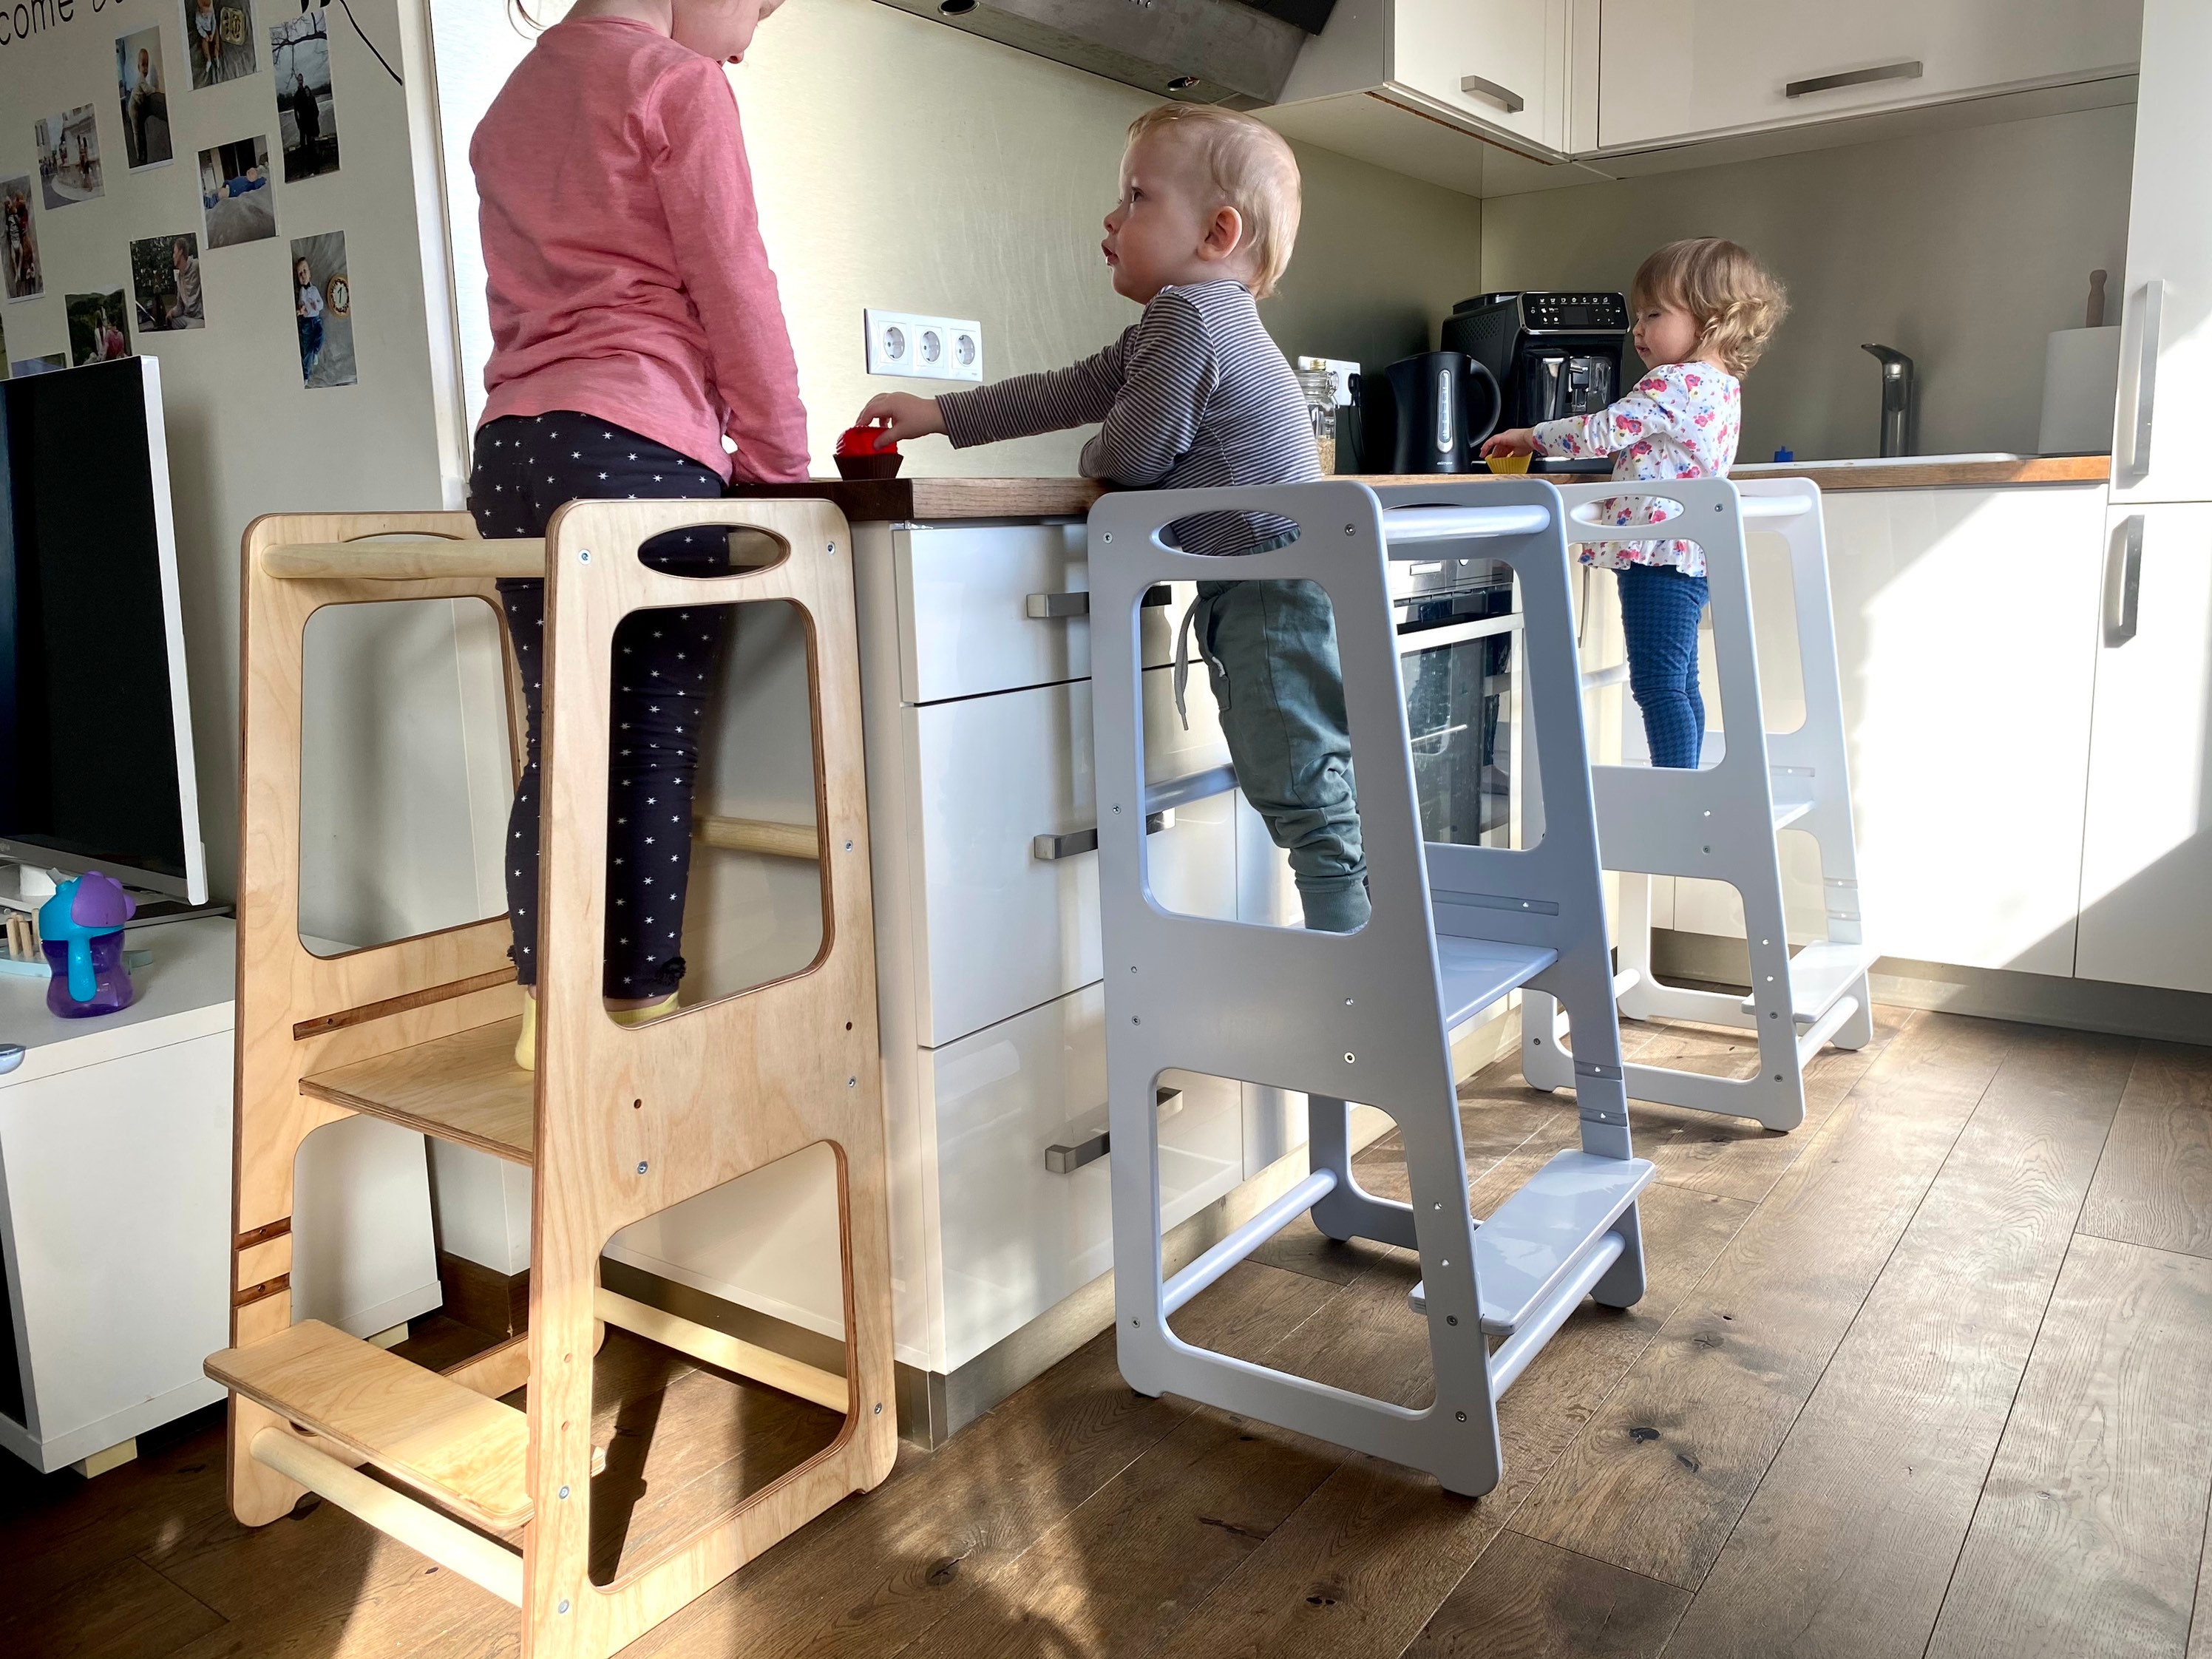 Our Montessori Home / Toddler Kitchen Tour - how we montessori